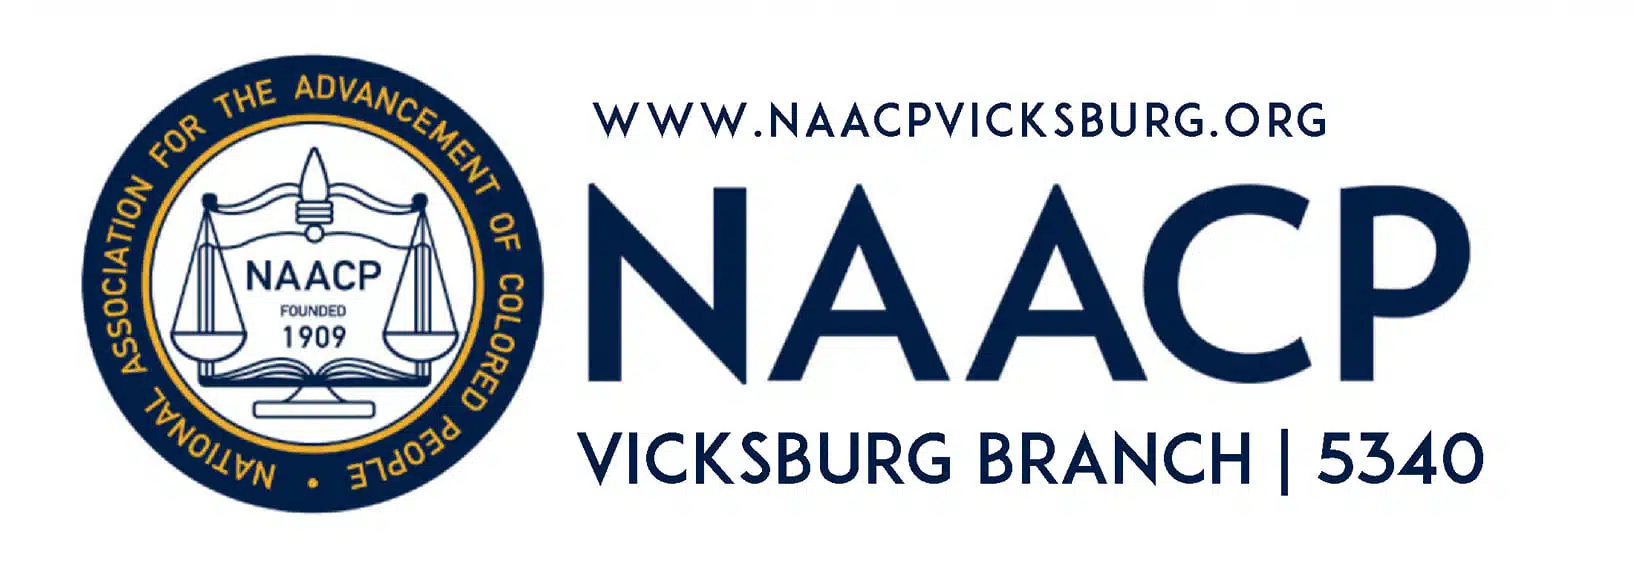 Vicksburg NAACP